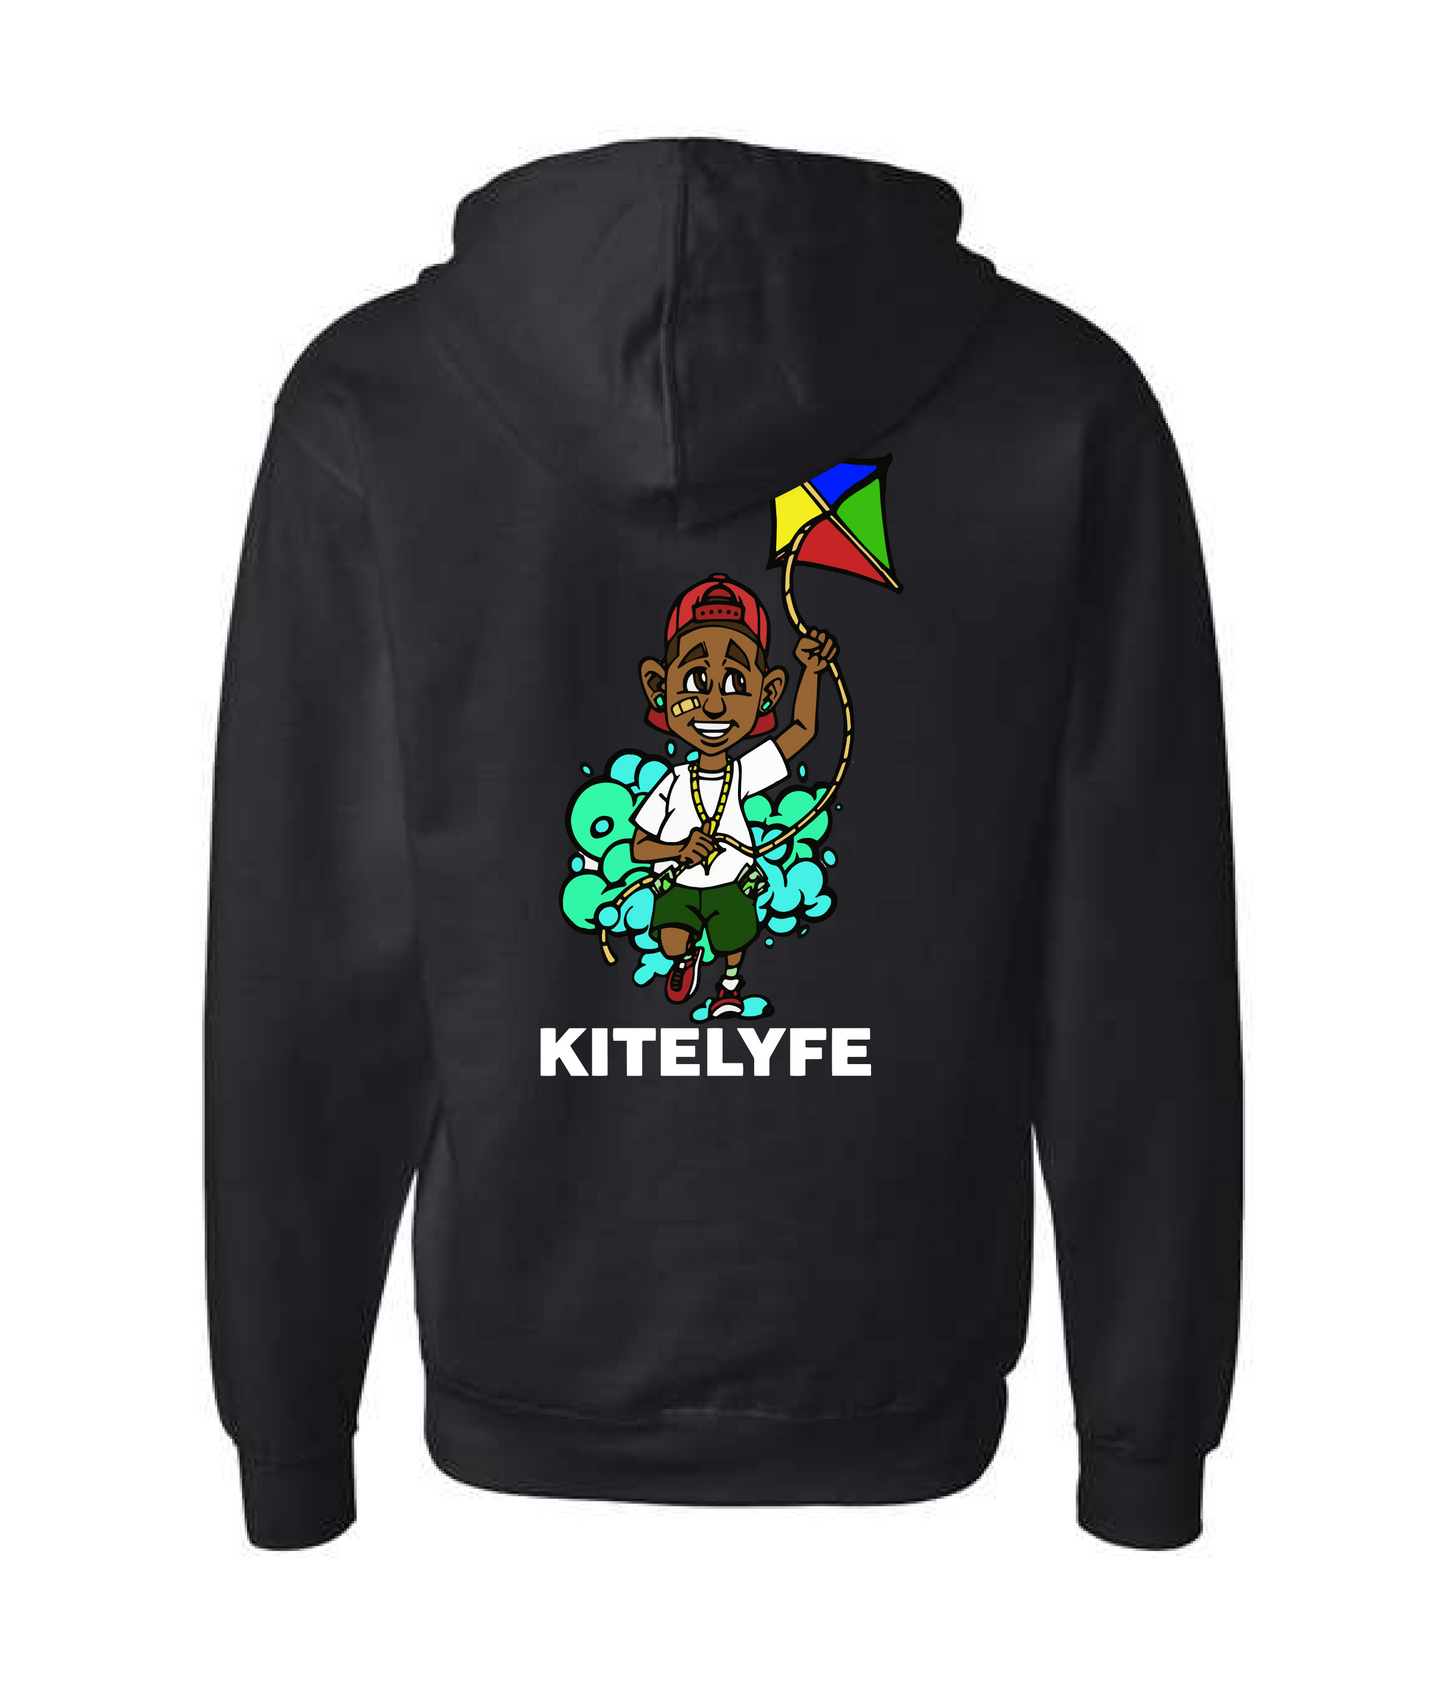 Kitelyfe - 4EVERKITED - Black Zip Up Hoodie